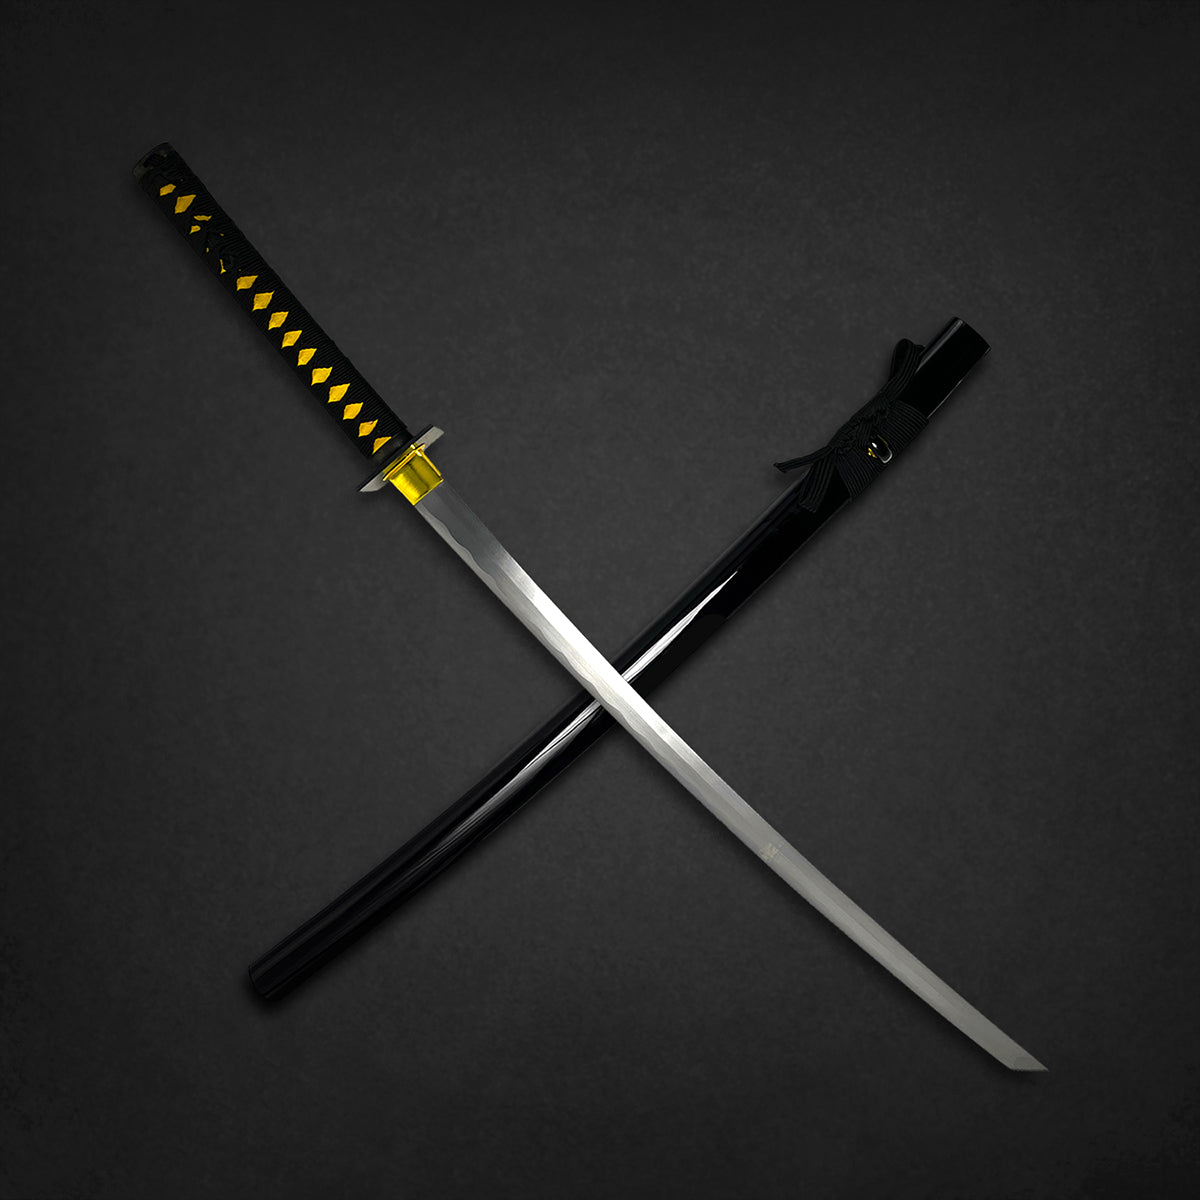 Real Katana Sword for Sale, Japanese Samurai Katana Blade With